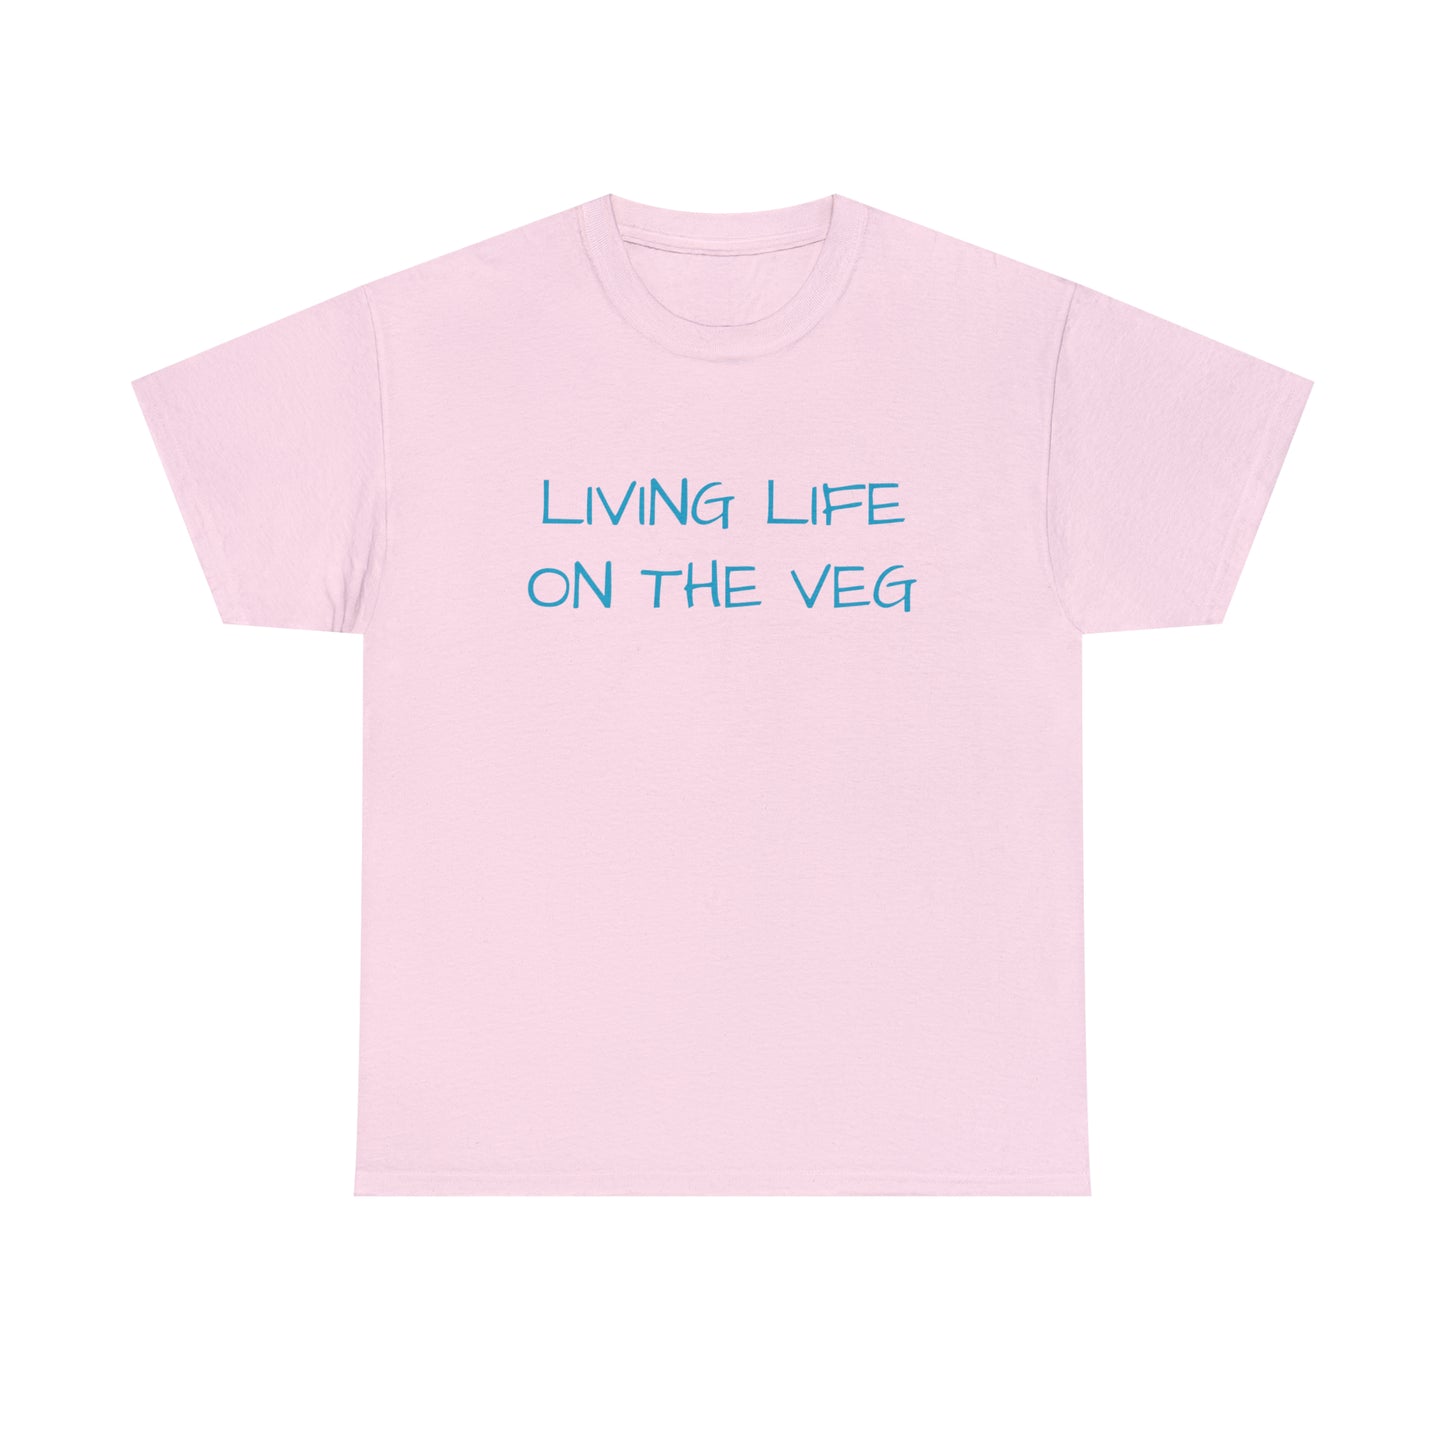 Custom Parody T-shirt, living life on the veg shirt design